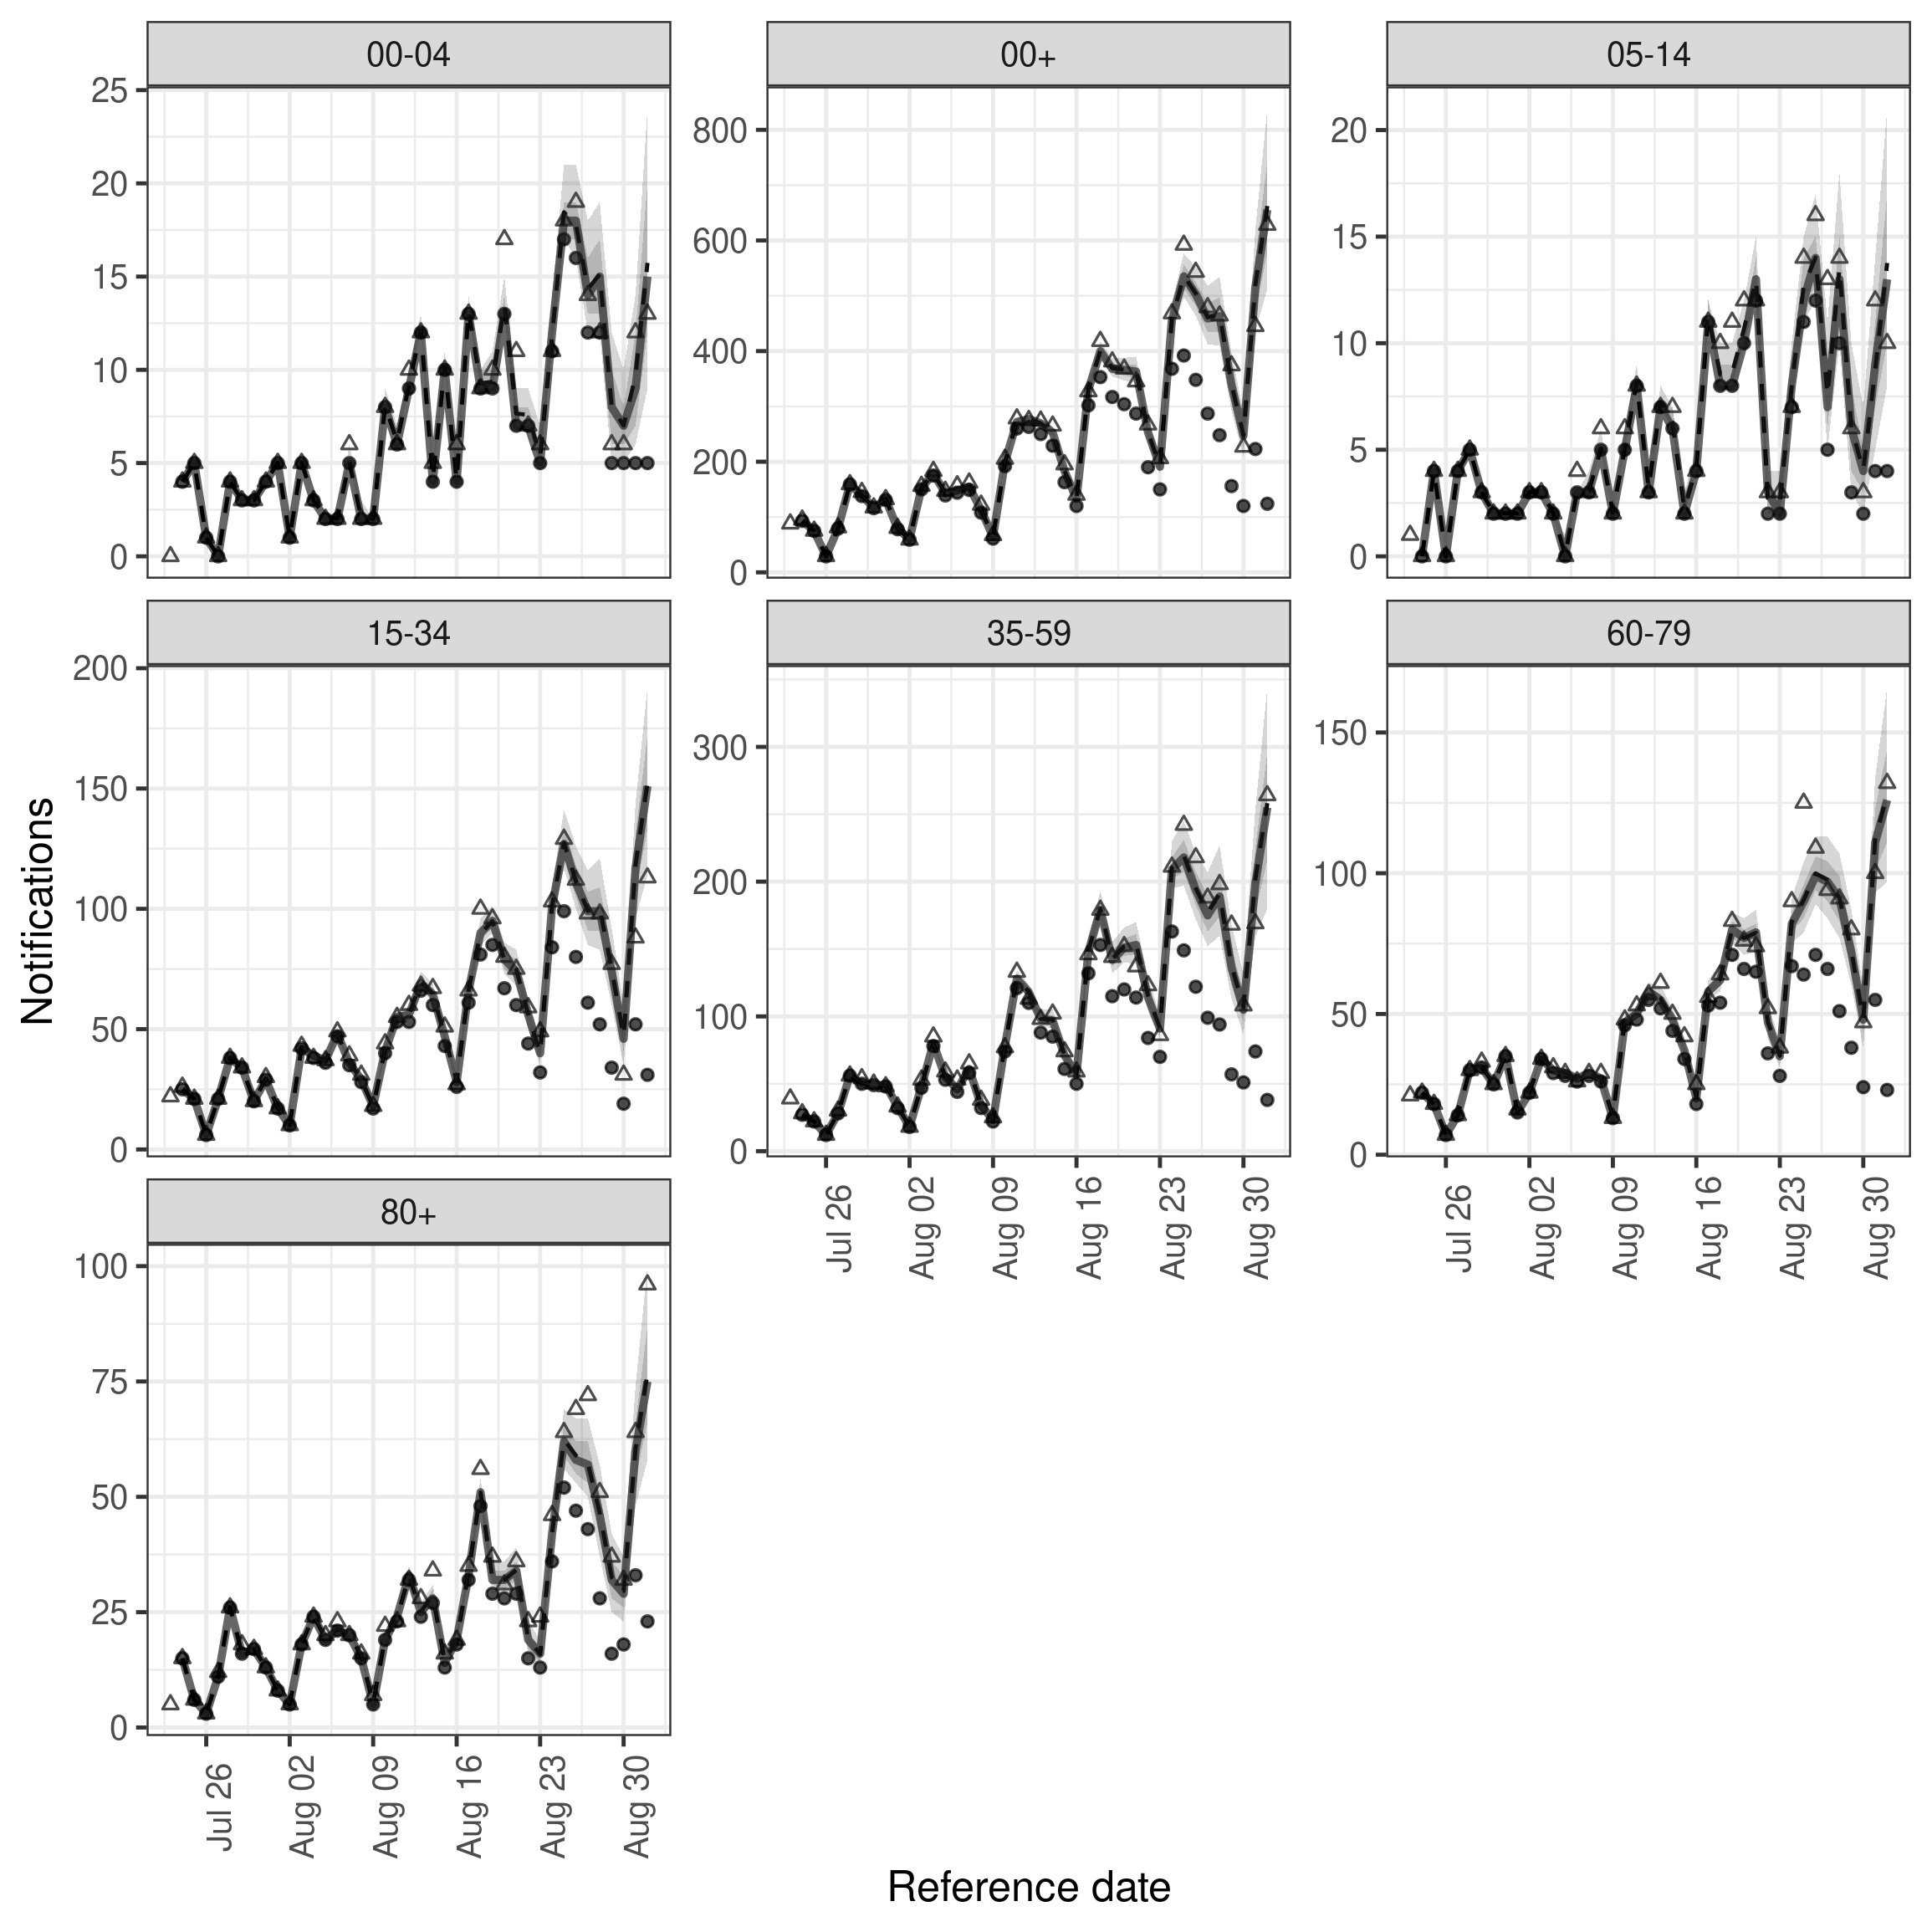 plot of chunk age_week_nowcast